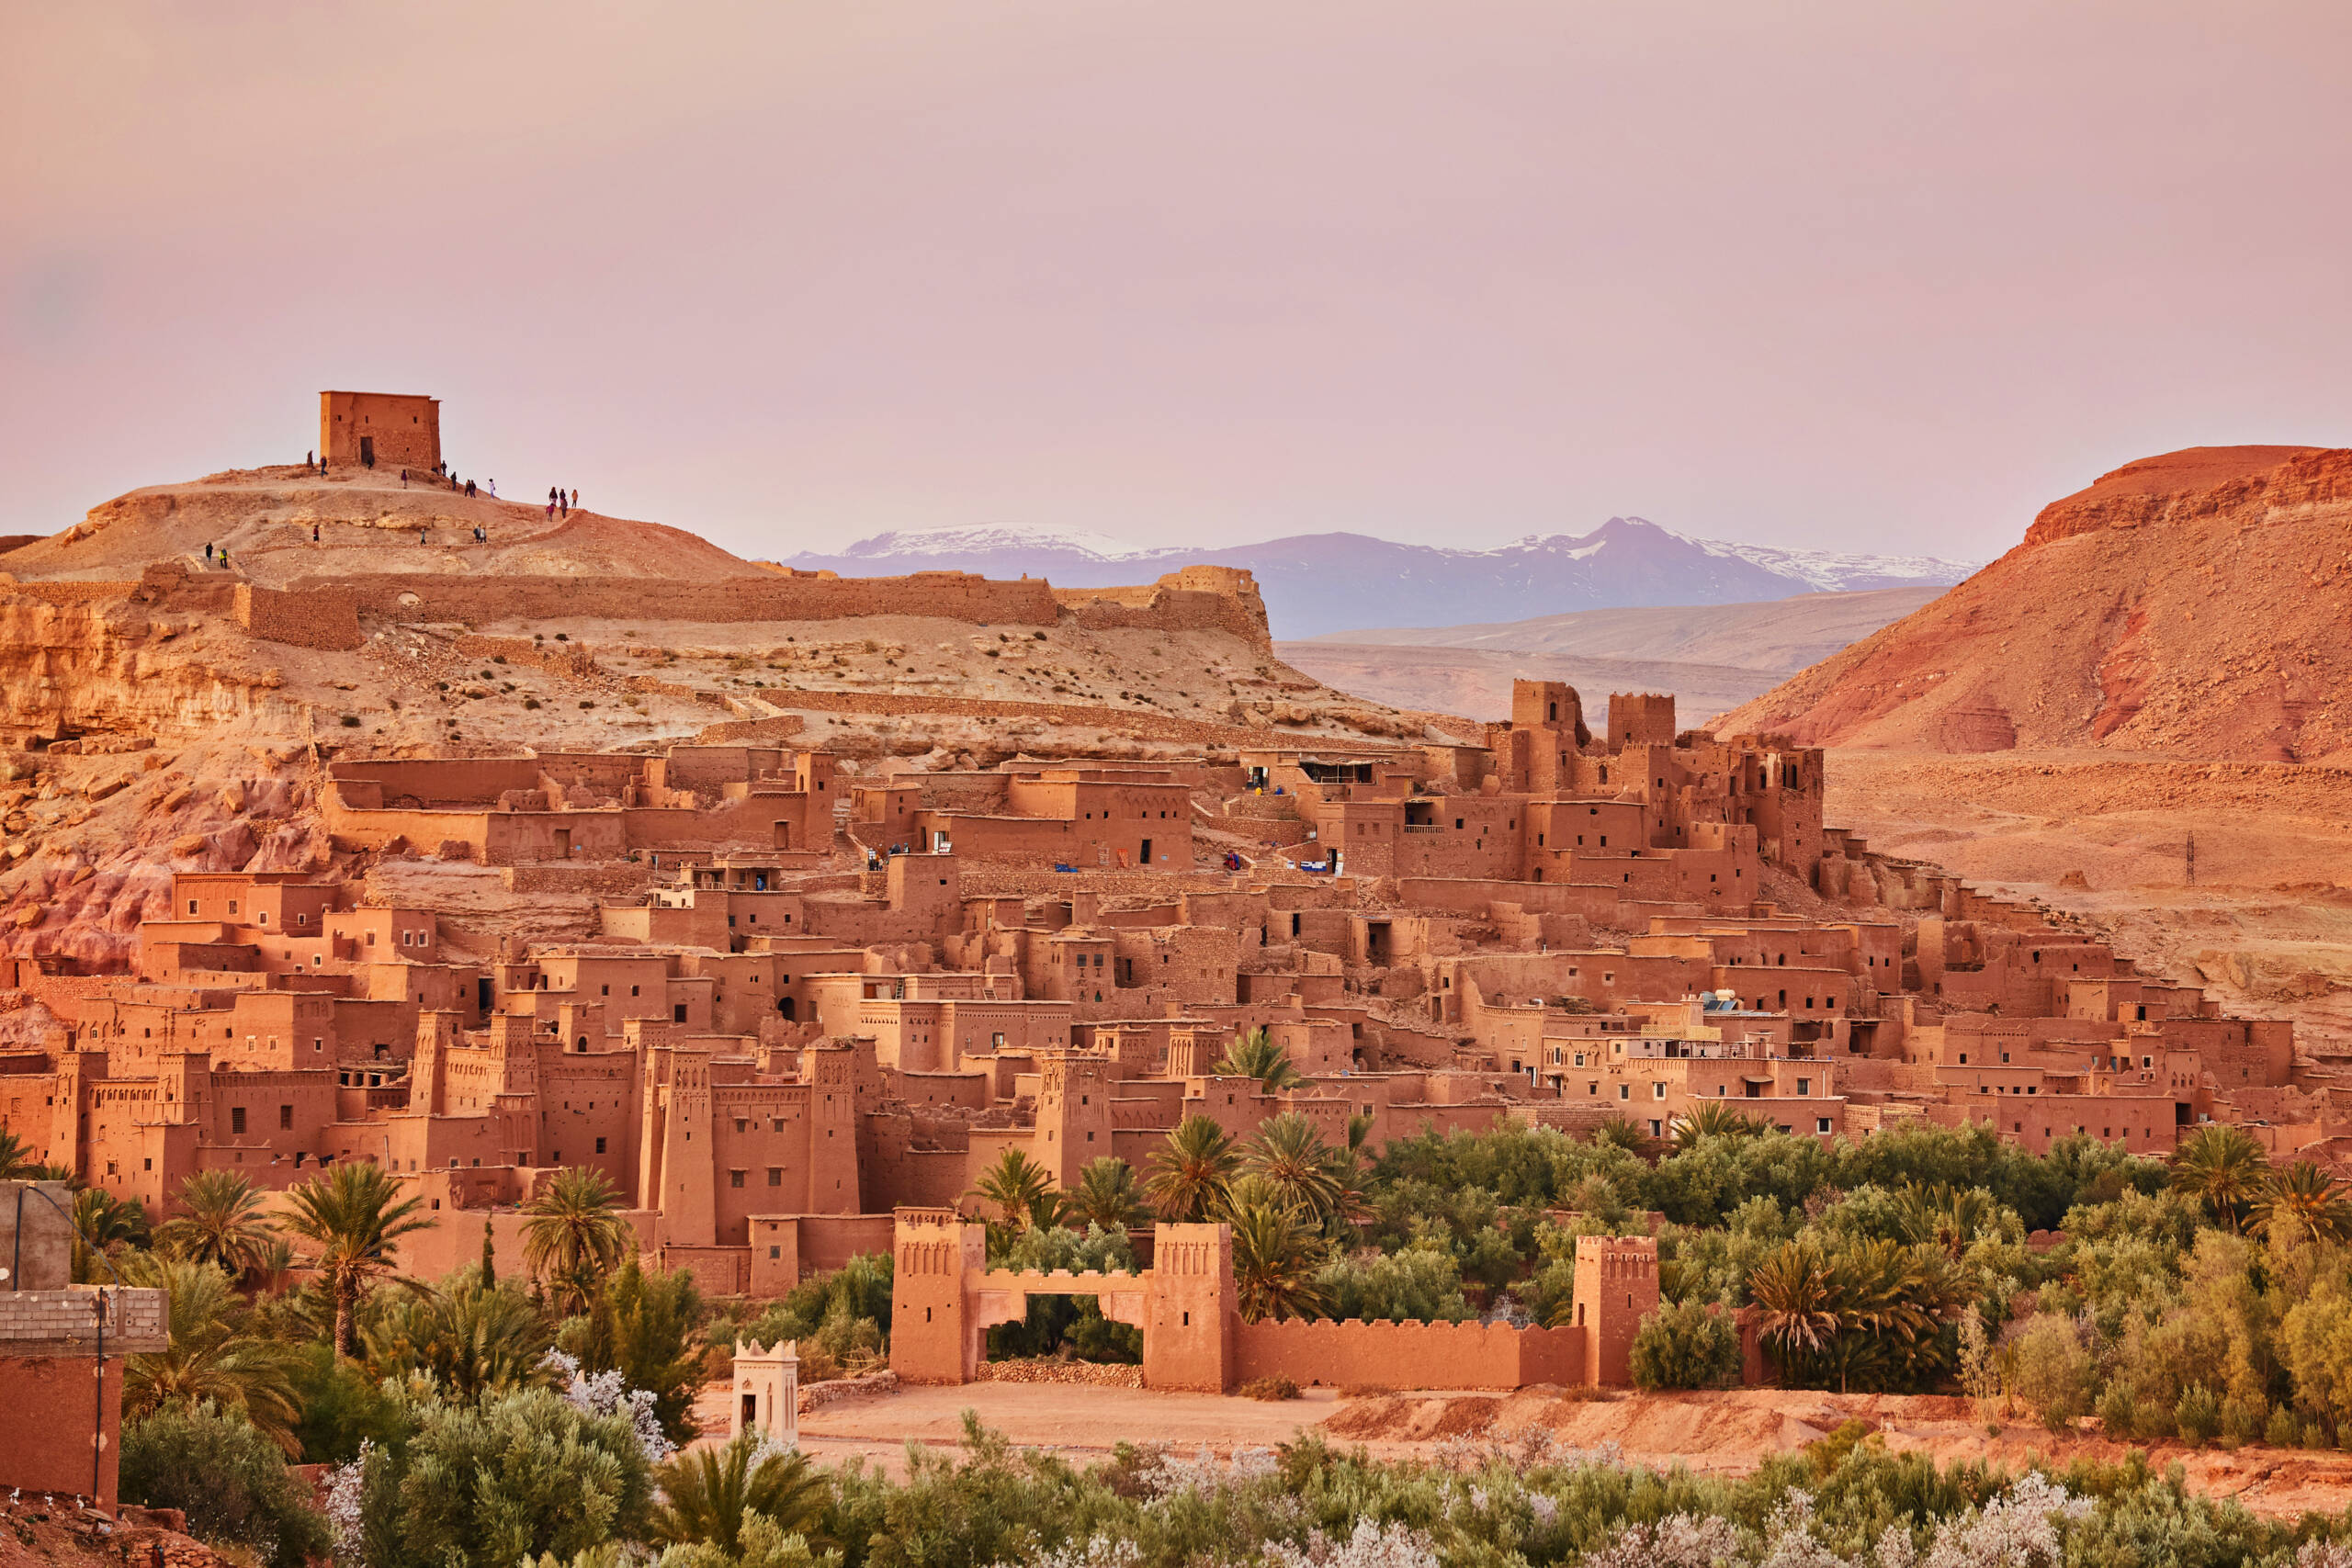 Town of Ait Ben Haddou near Ouarzazate on the edge of the Sahara Desert in Morocco.